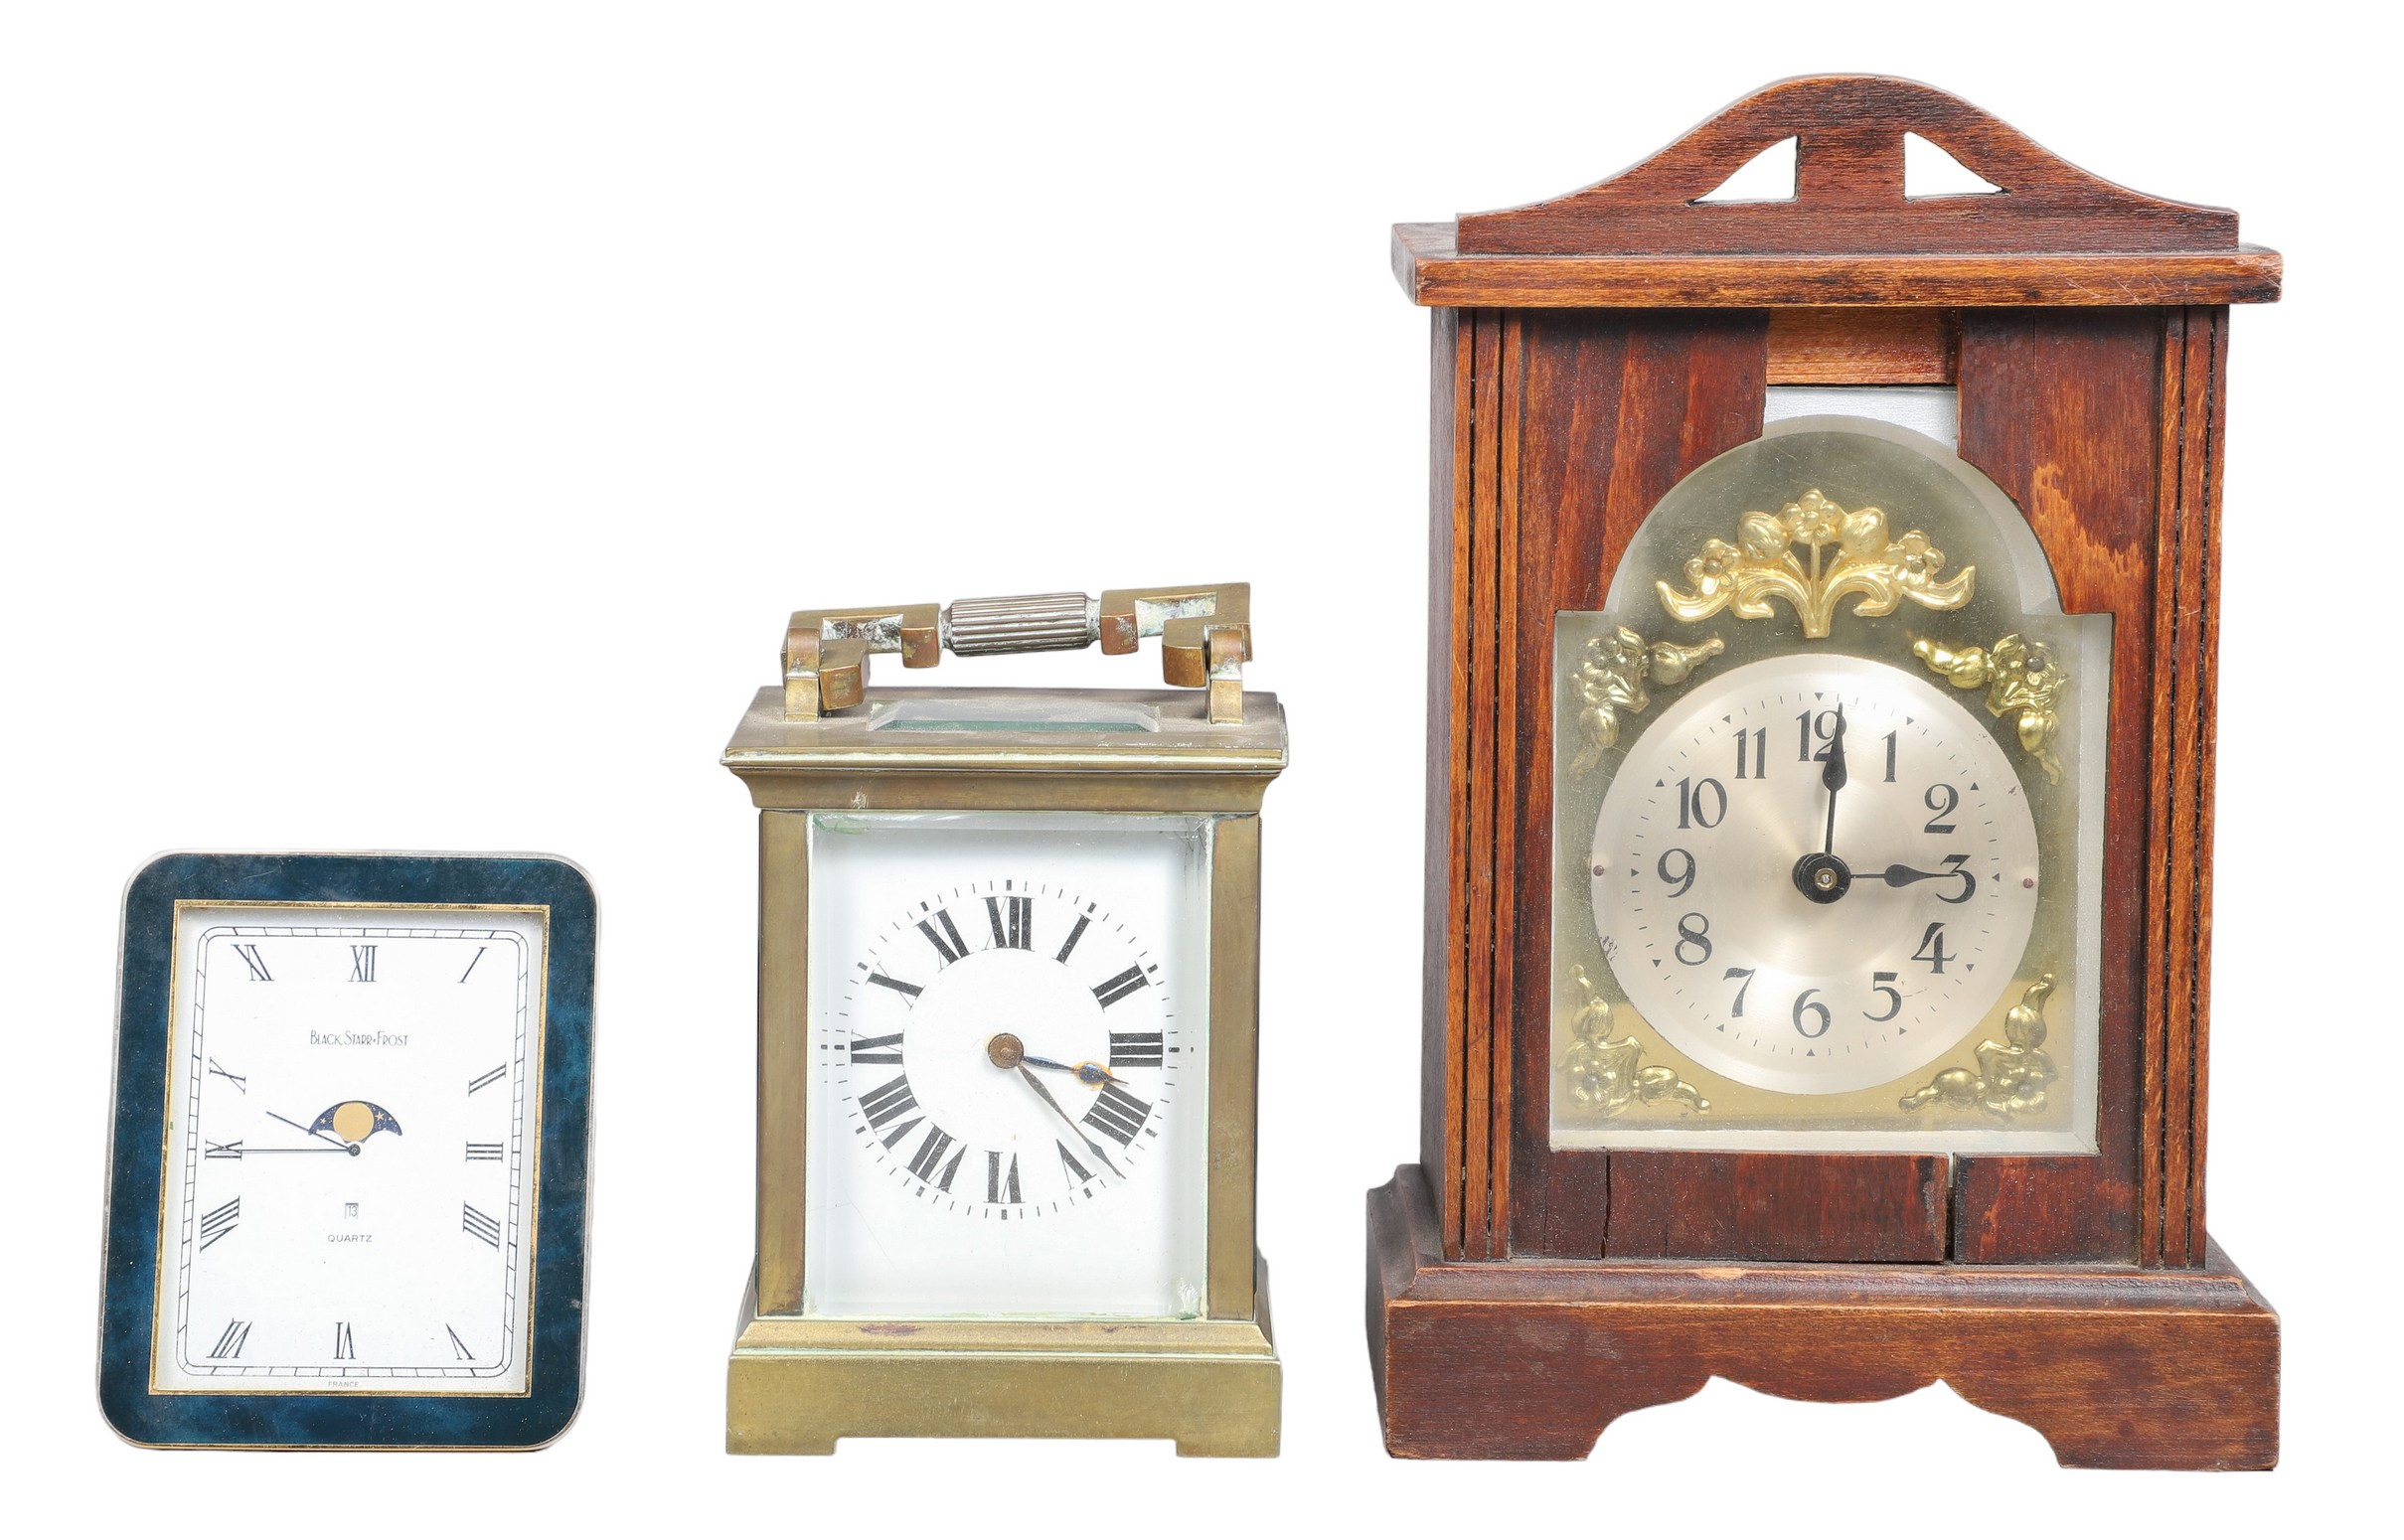  3 Carriage clock mantle clock  2e0b6c